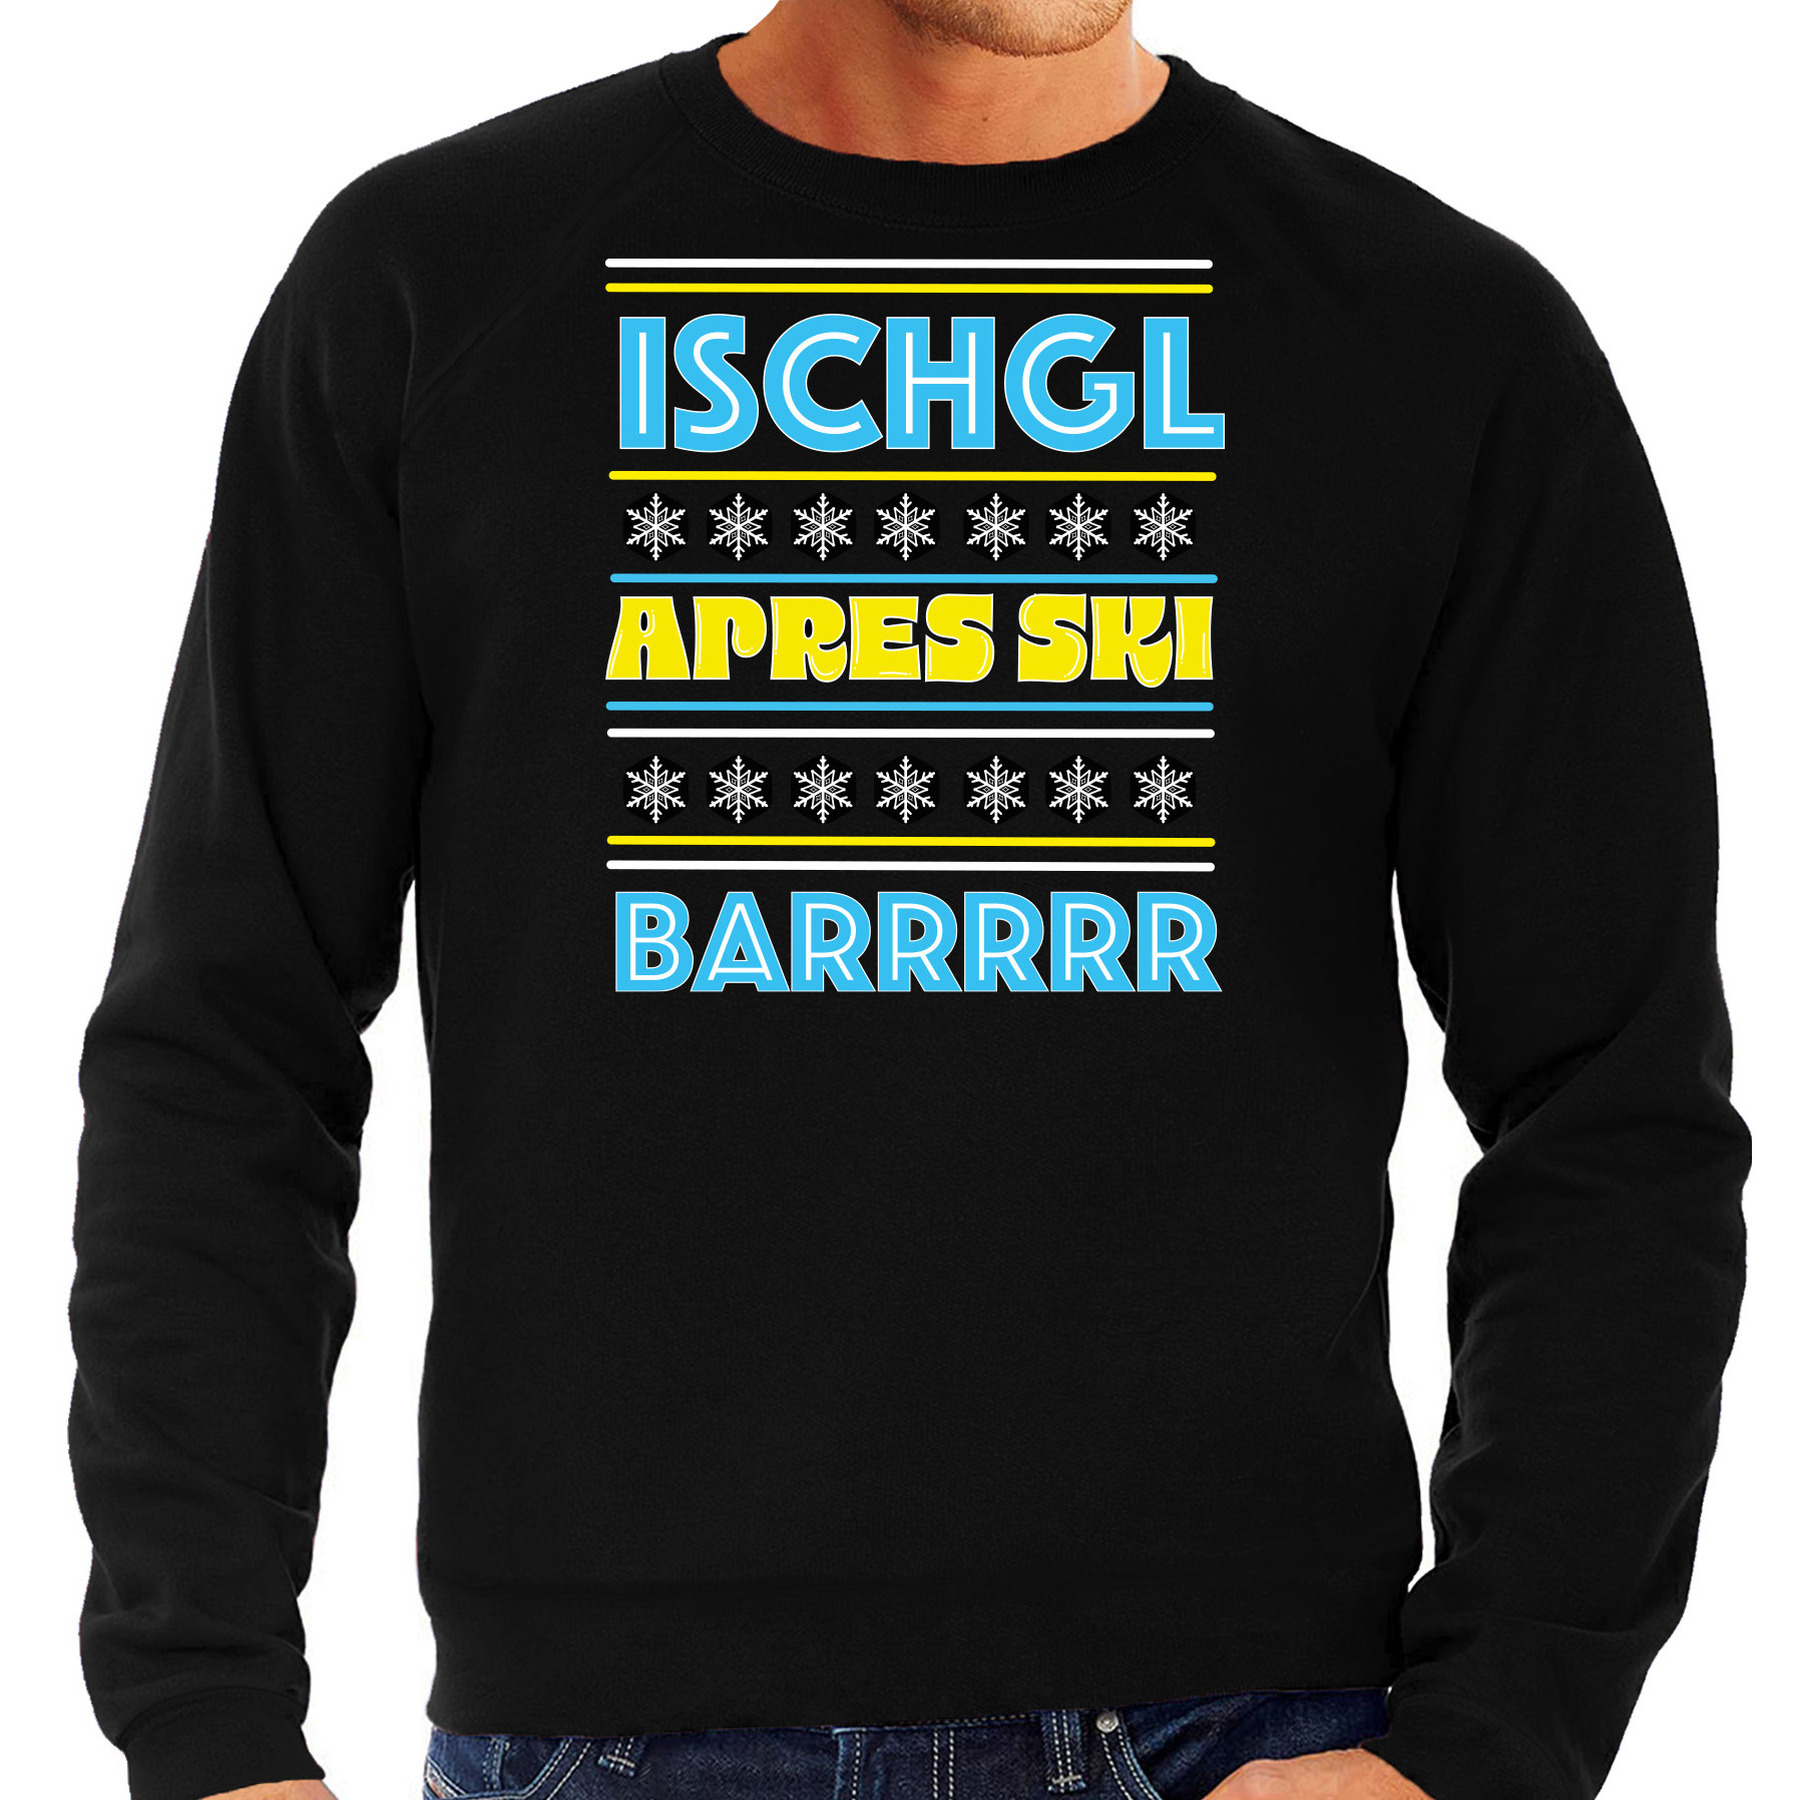 Apres ski sweater voor heren Ischgl zwart apresski kroeg skien-snowboarden wintersport